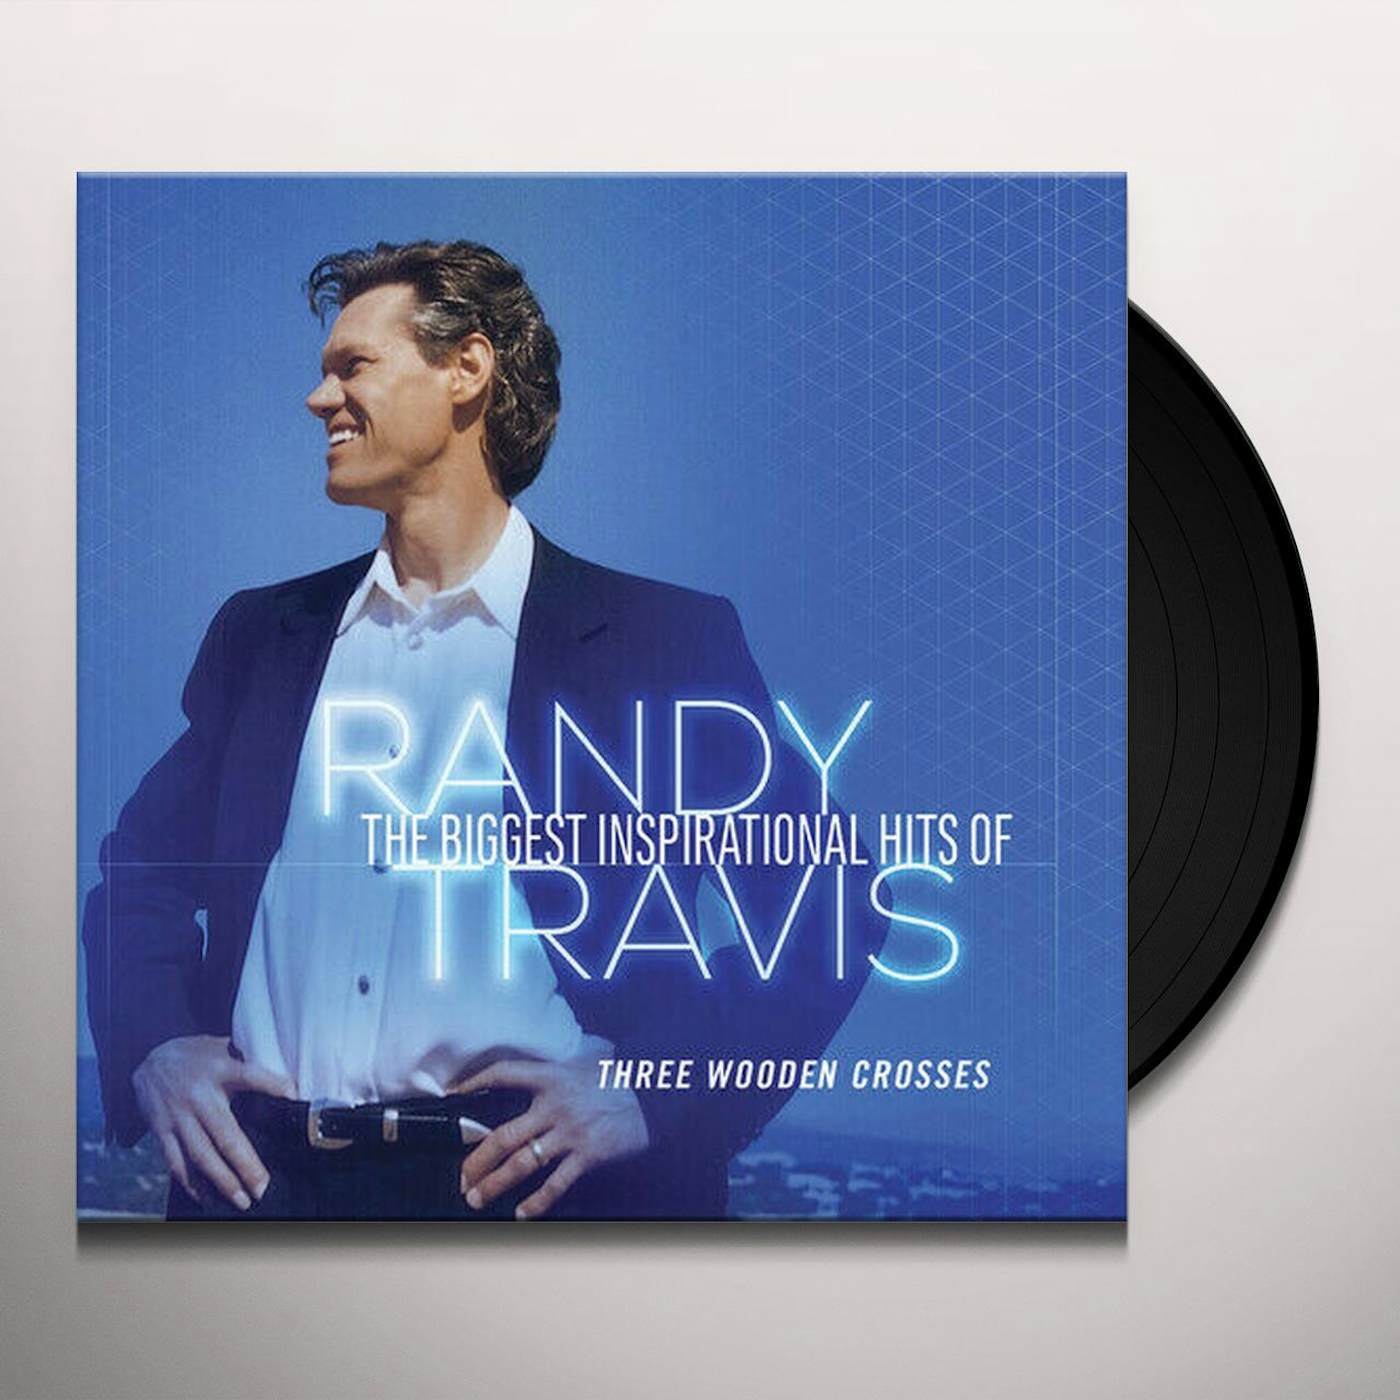 BIGGEST INSPIRATIONAL HITS OF RANDY TRAVIS Vinyl Record